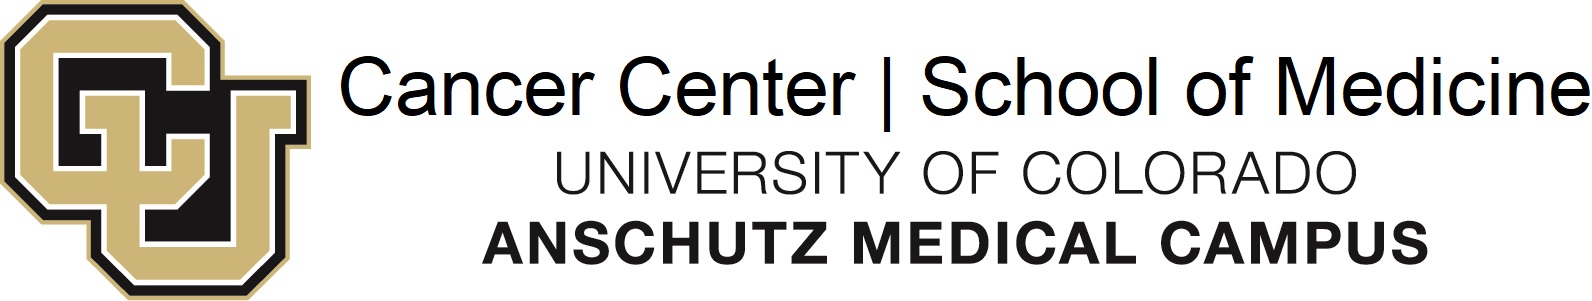 Cancer Center Logo